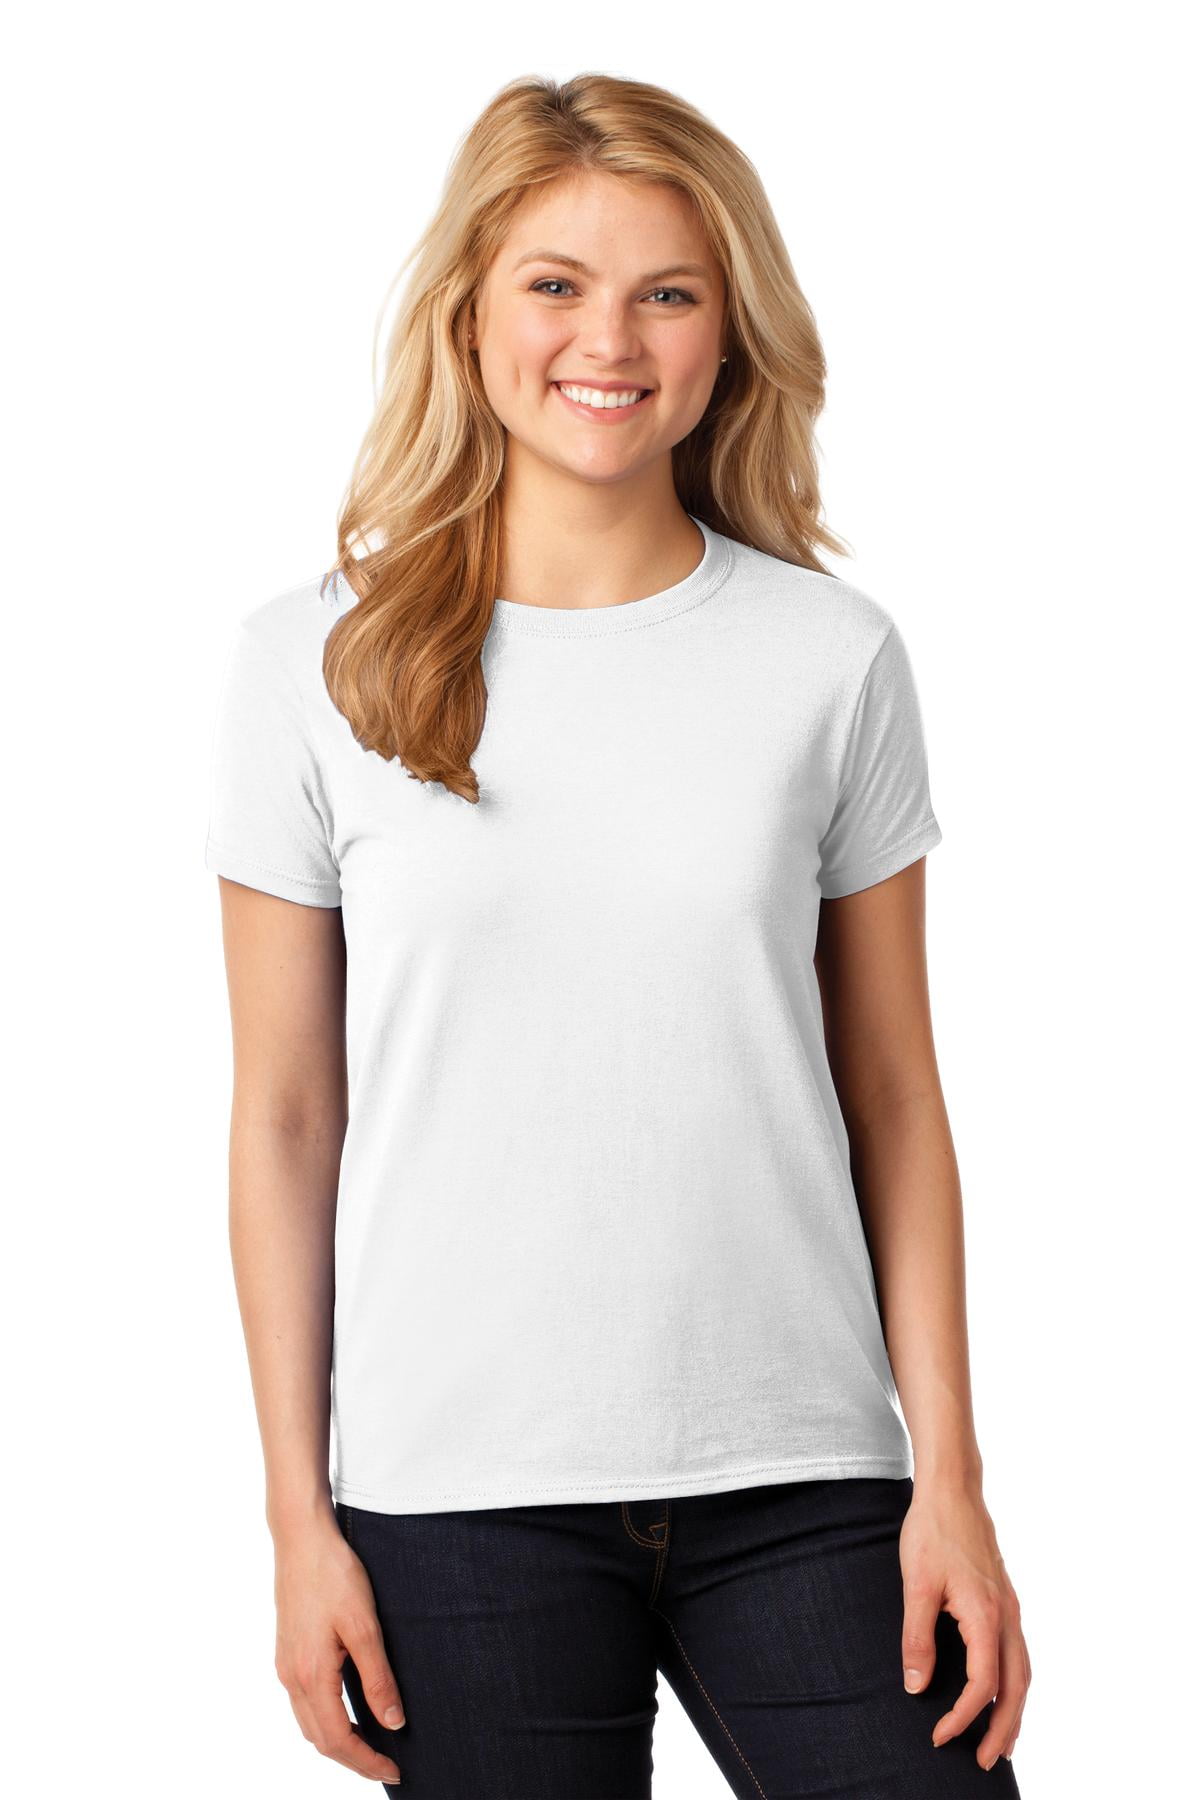 5 Pack Gildan Ladies 100% Ringspun Cotton V Neck Short Sleeve T-Shirt Tee Top 